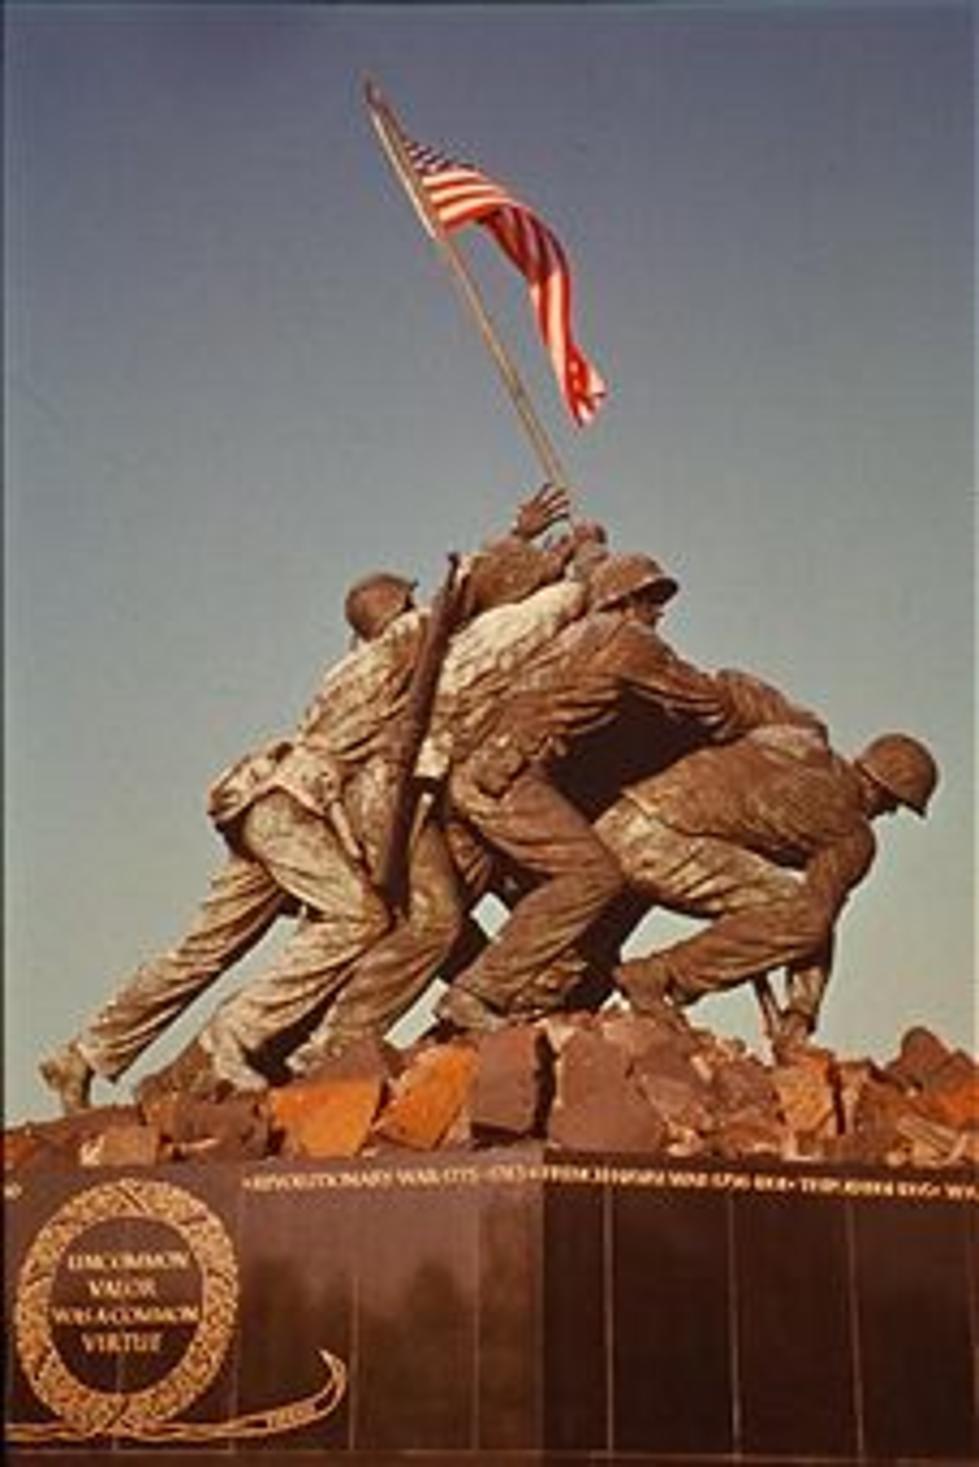 WBKR Salutes All Veterans — Veteran’s Day is Tomorrow